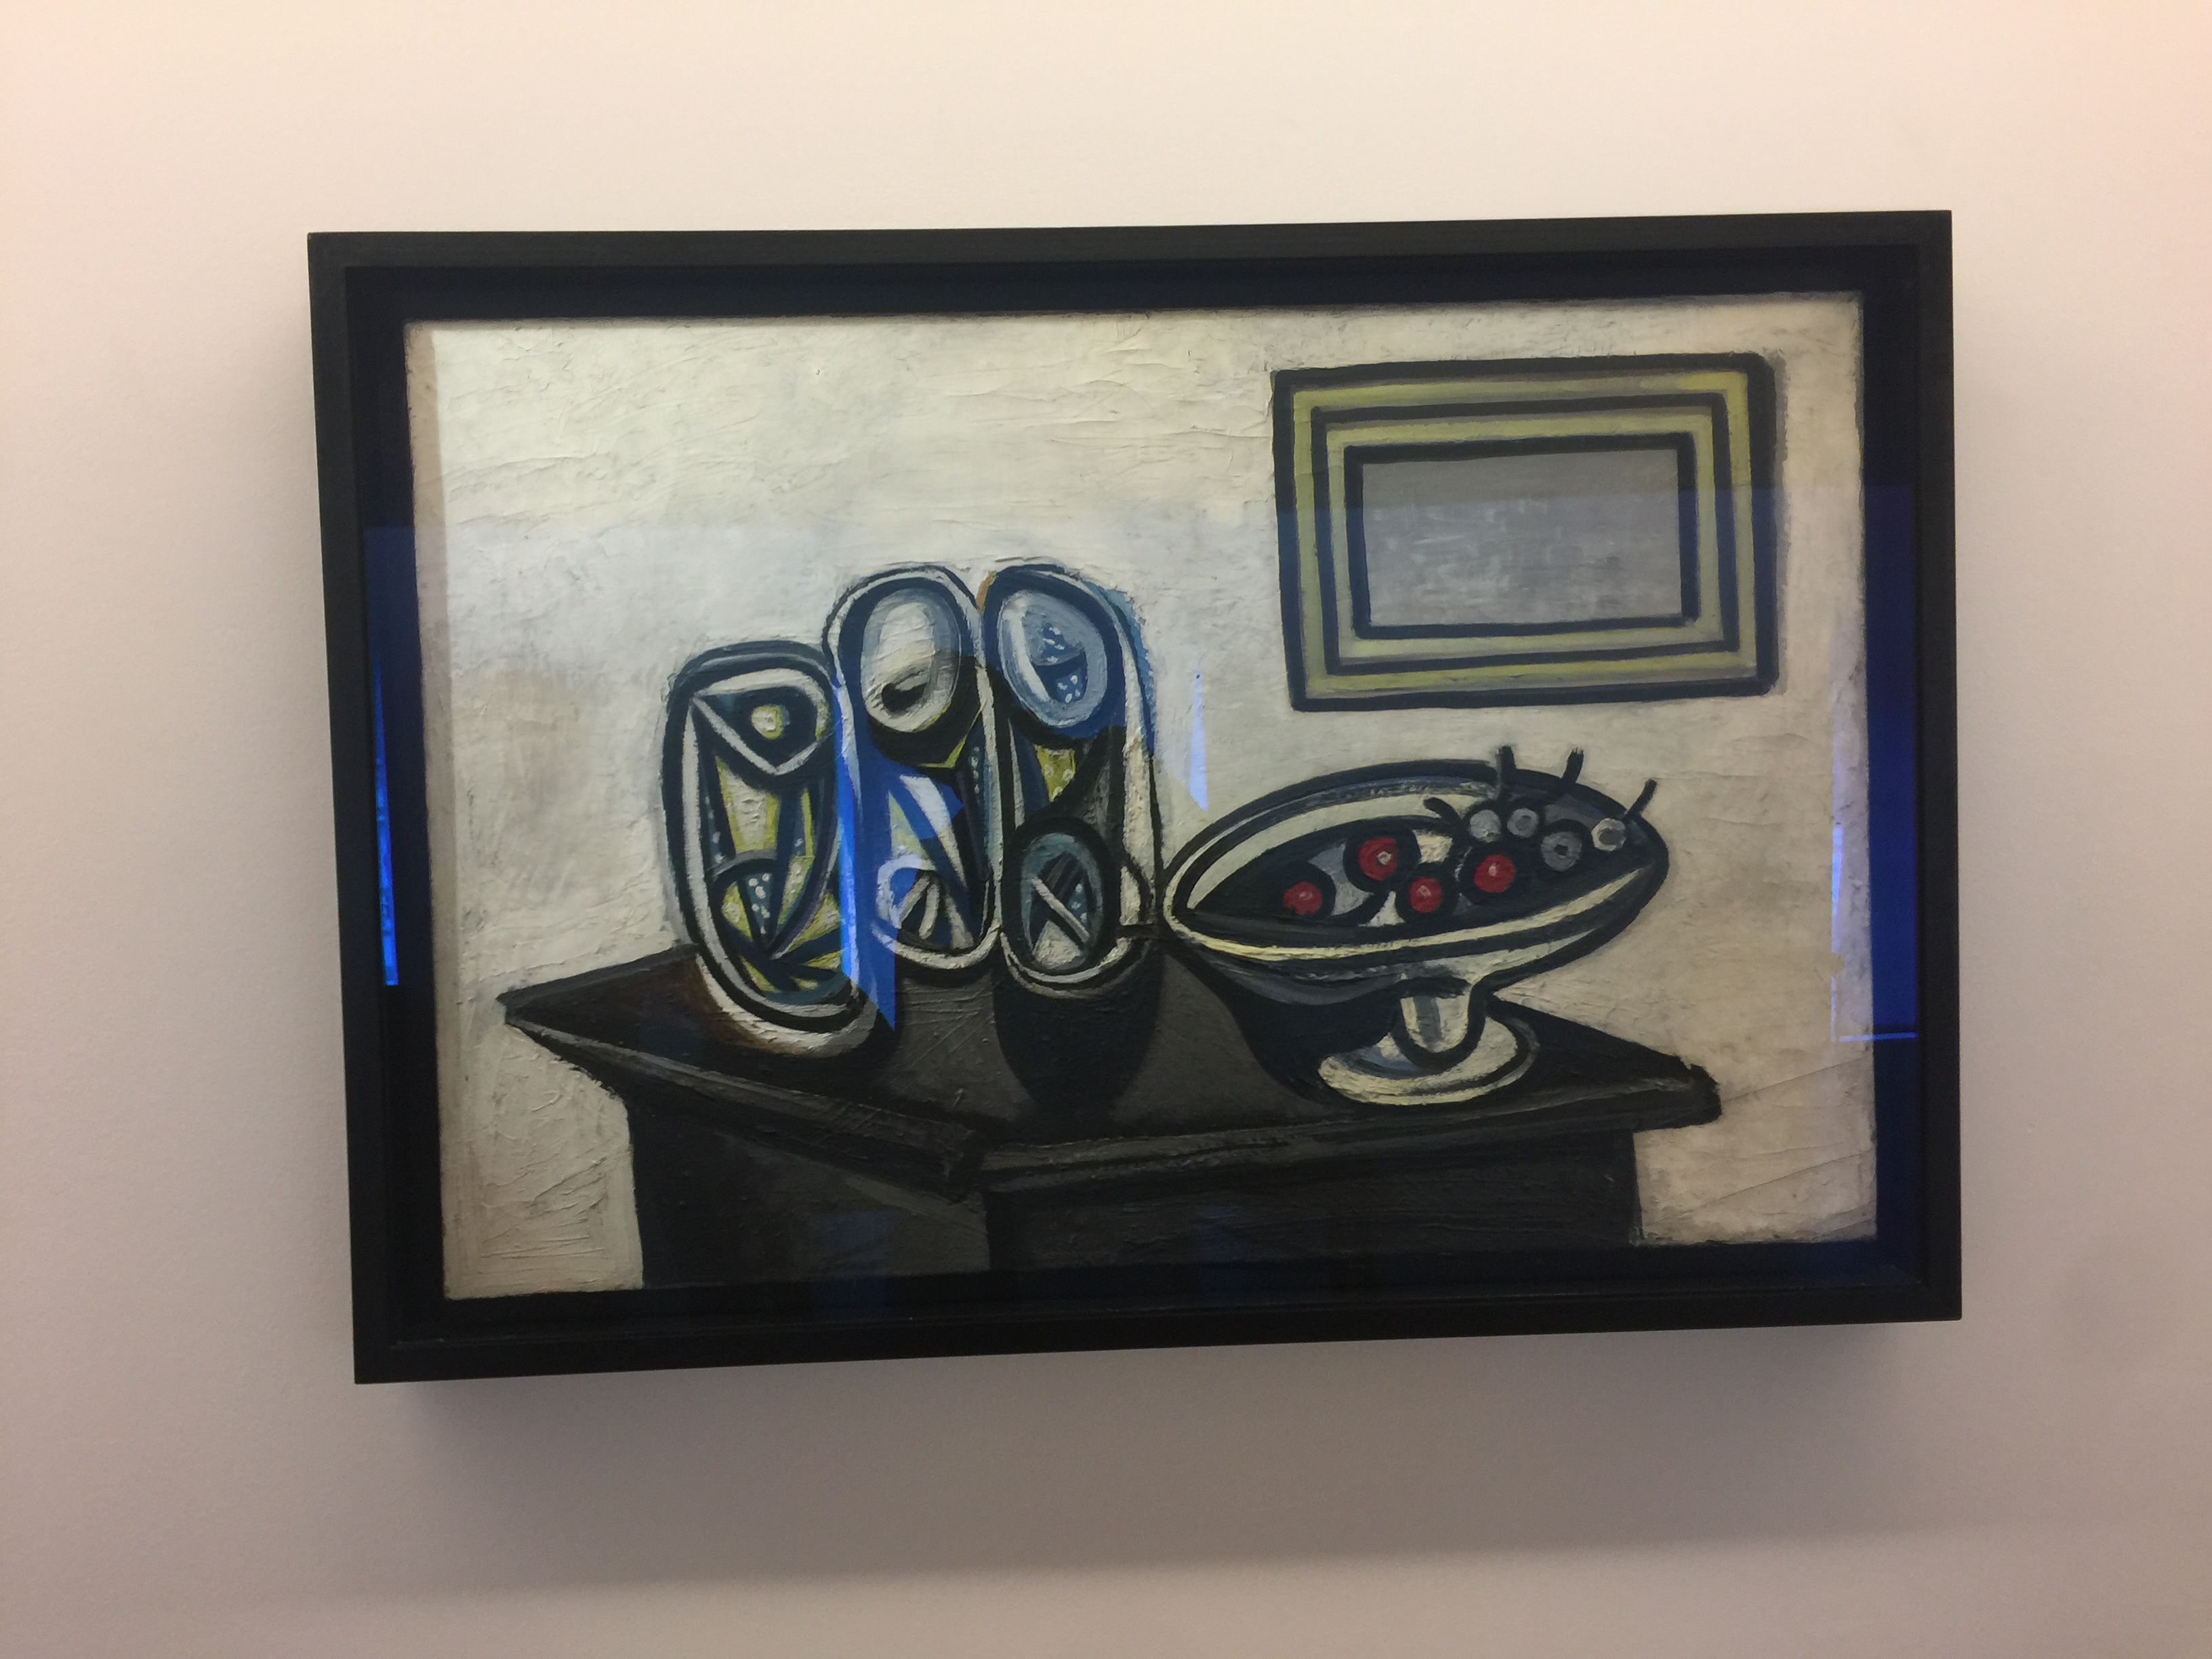 Picasso 1947. A major gift, Picasso Museum, Paris: 24 October 2017 - 28 January 2018